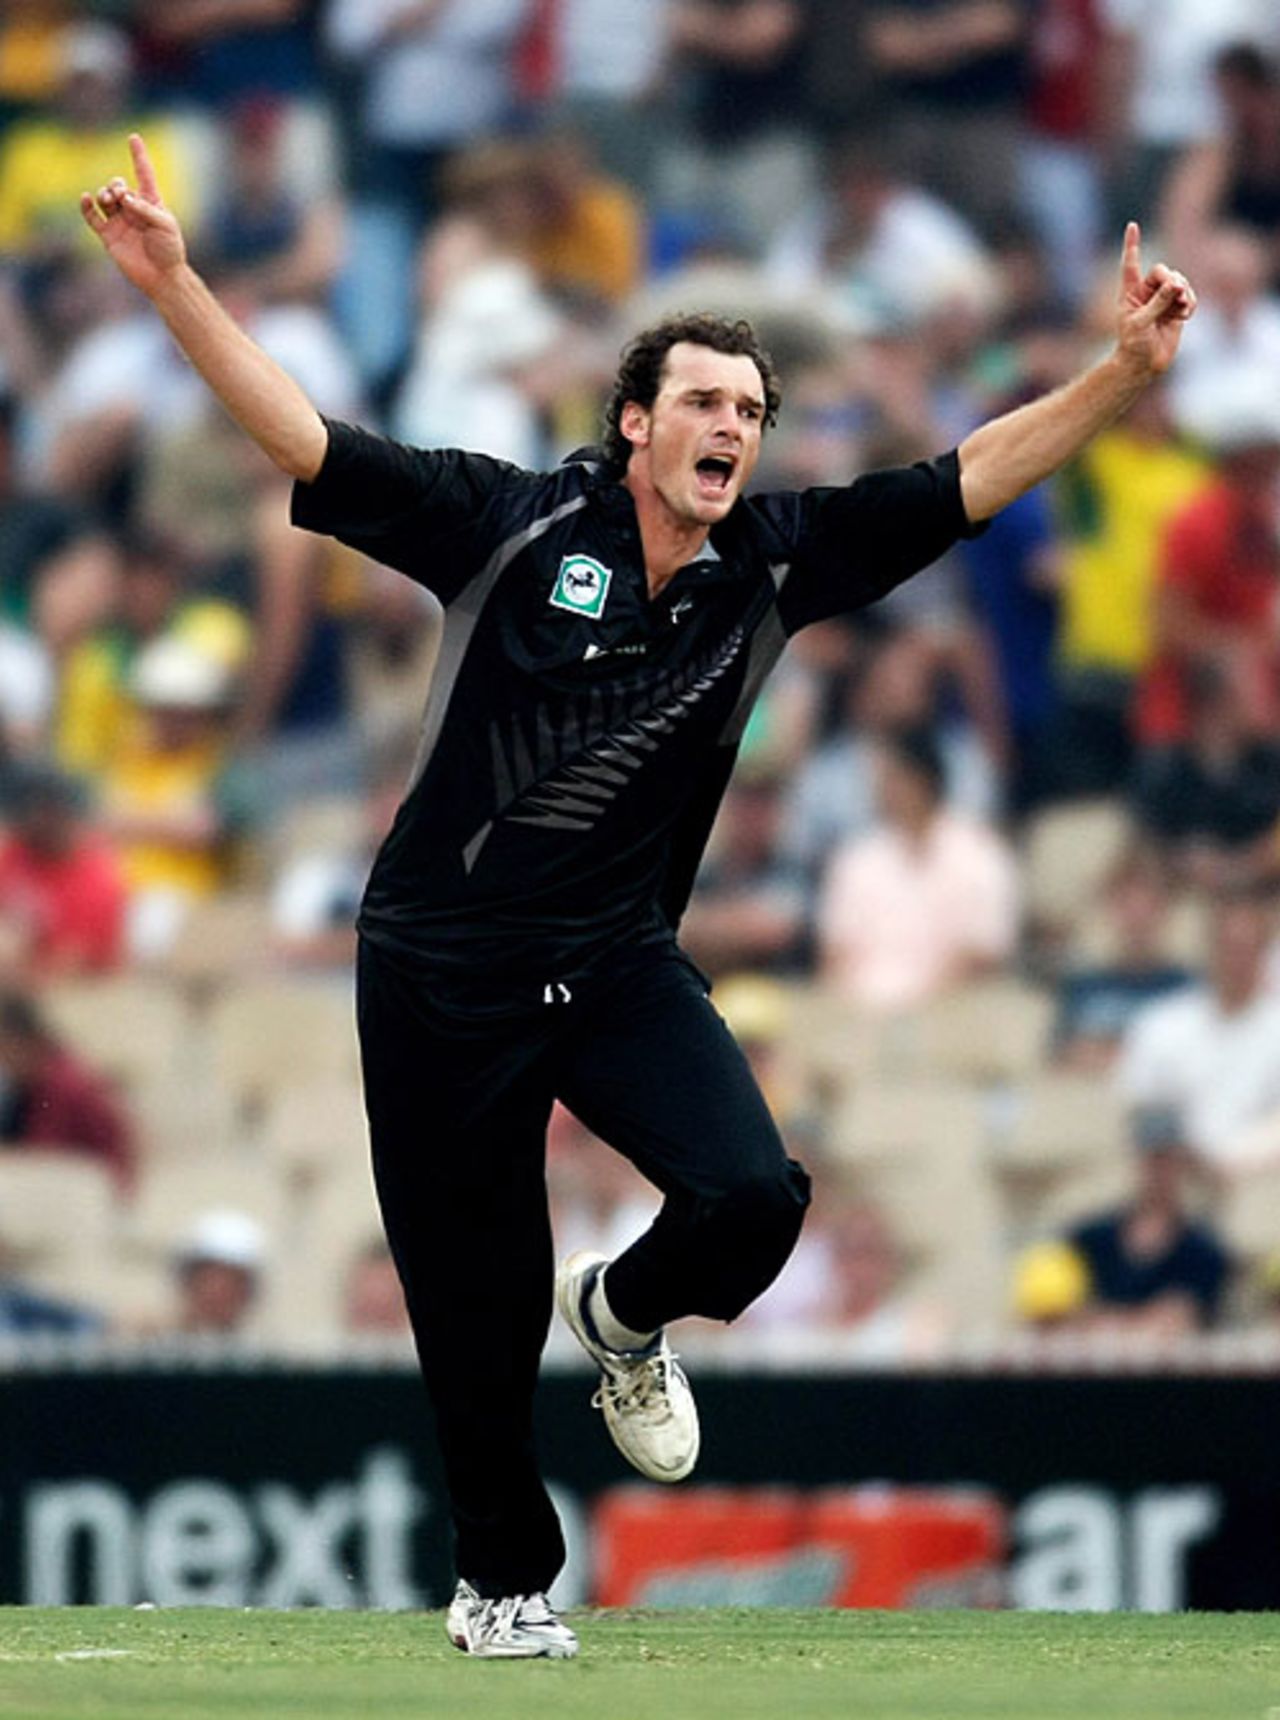 Kyle Mills celebrates Matthew Hayden's wicket, Australia v New Zealand, 1st ODI, Chappell-Hadlee Trophy, December 14, 2007